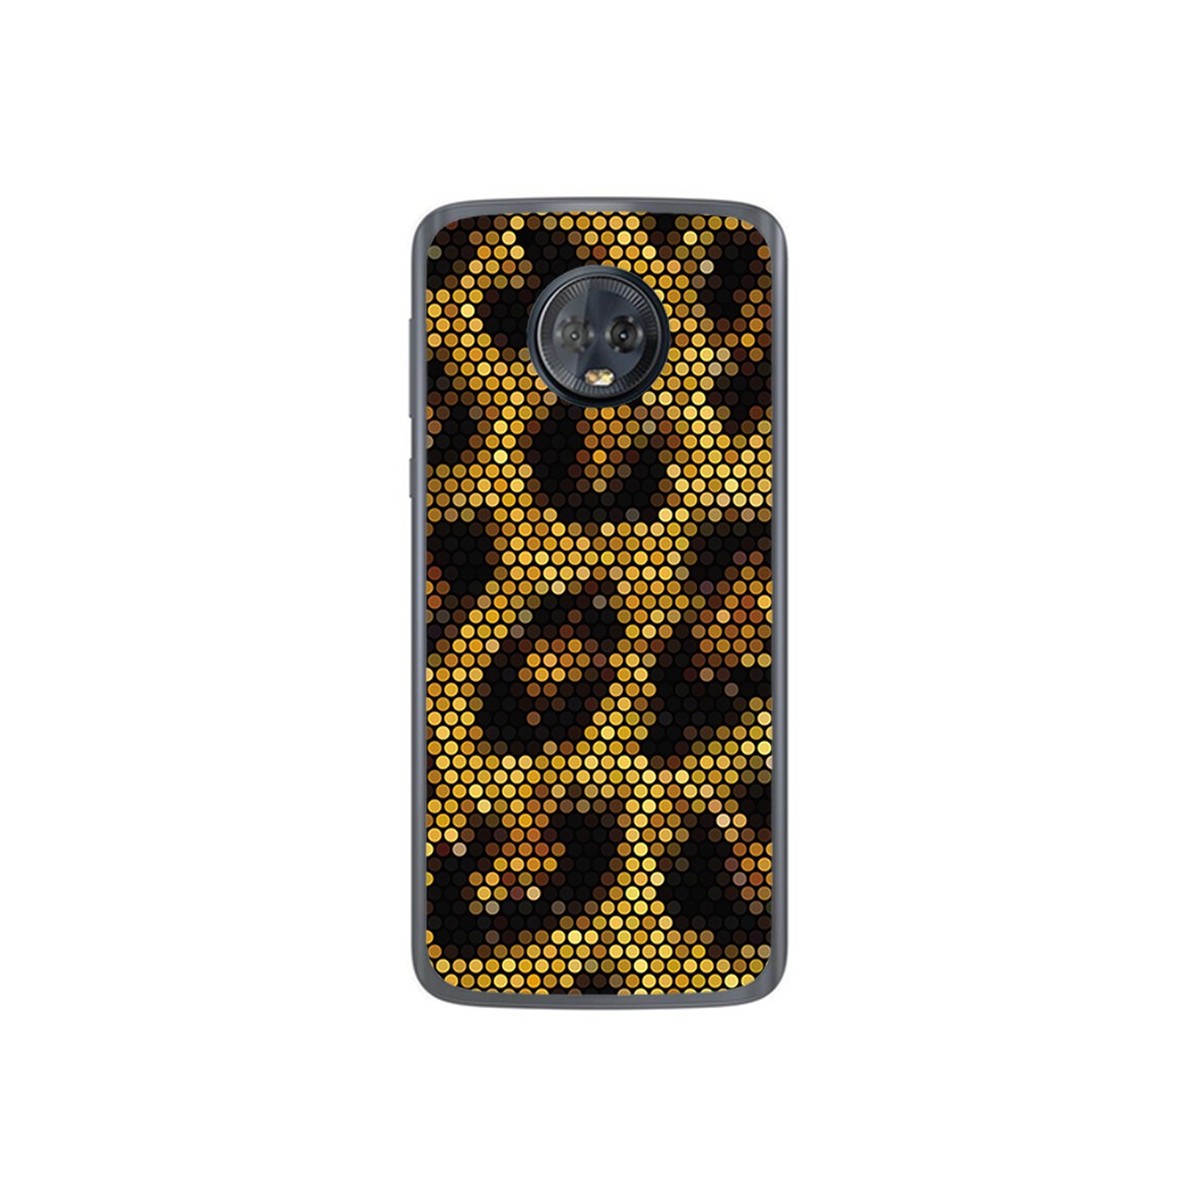 Funda Gel Tpu para Motorola Moto G6 Diseño Leopardo Dibujos